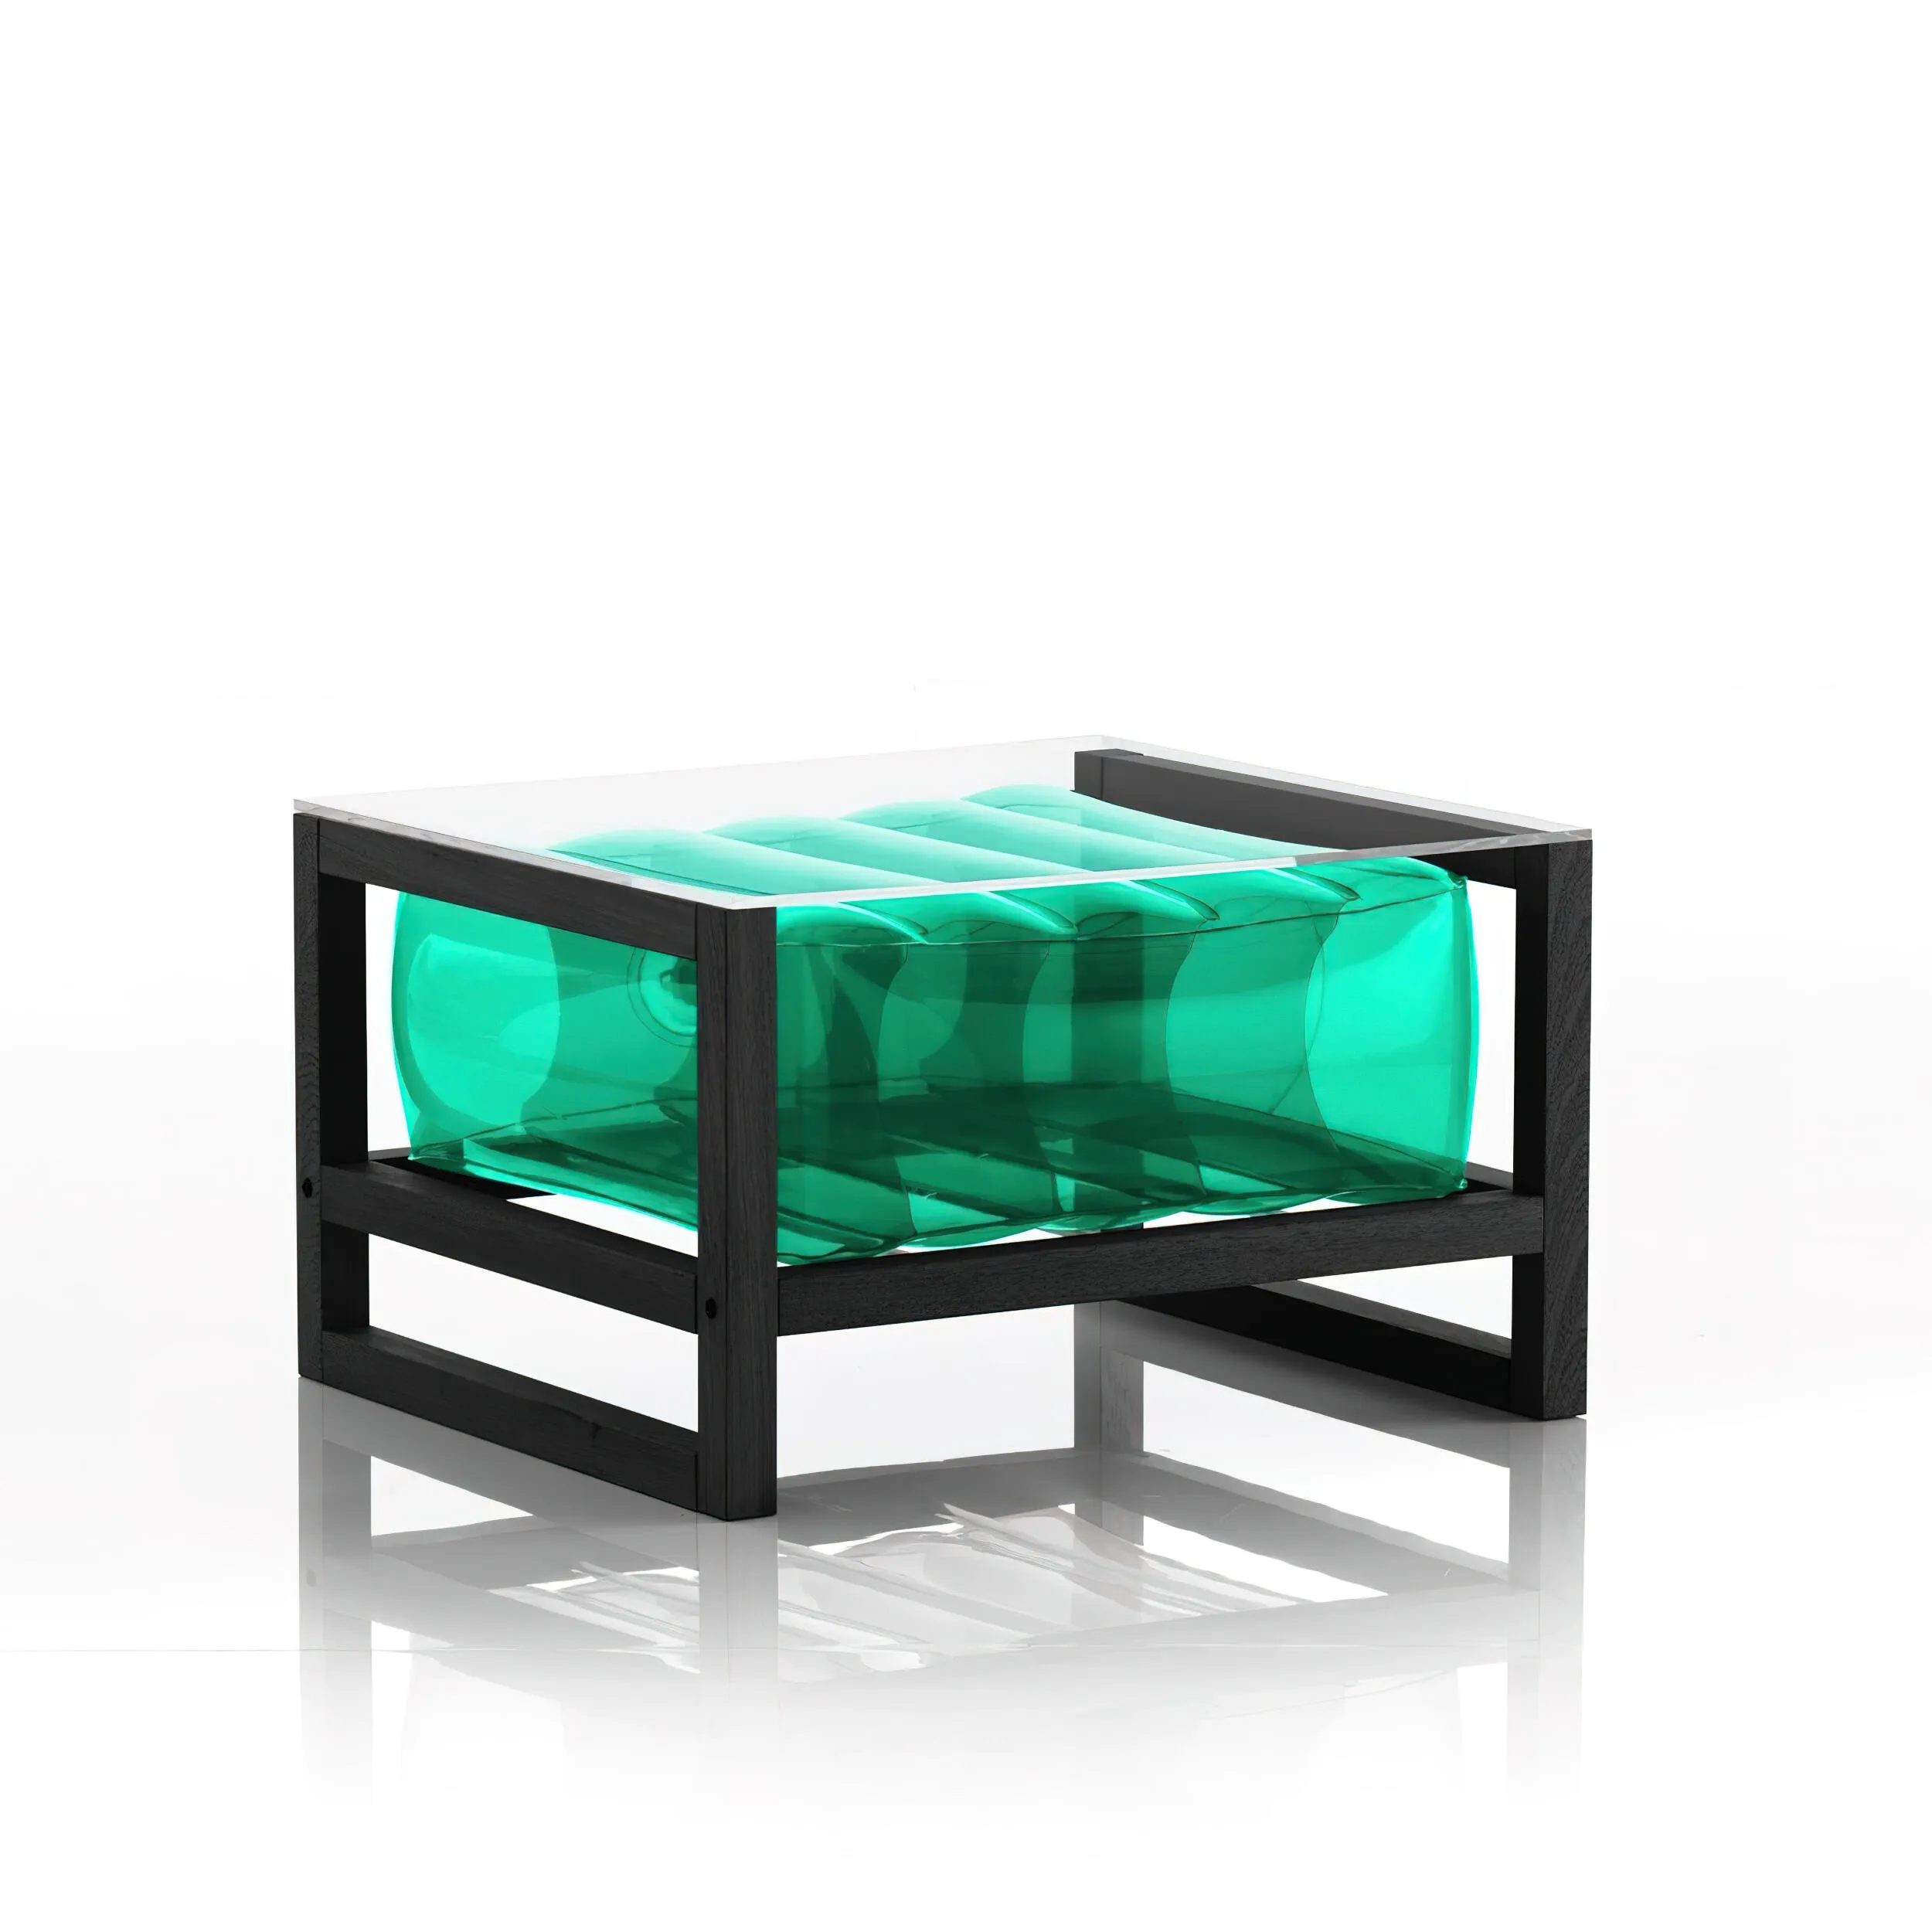 tavolino da salotto Yoko eko struttura in legno nero, dimensioni 62x70xH40 cm peso 14 kg, seduta gonfiabile in TPU colore verde